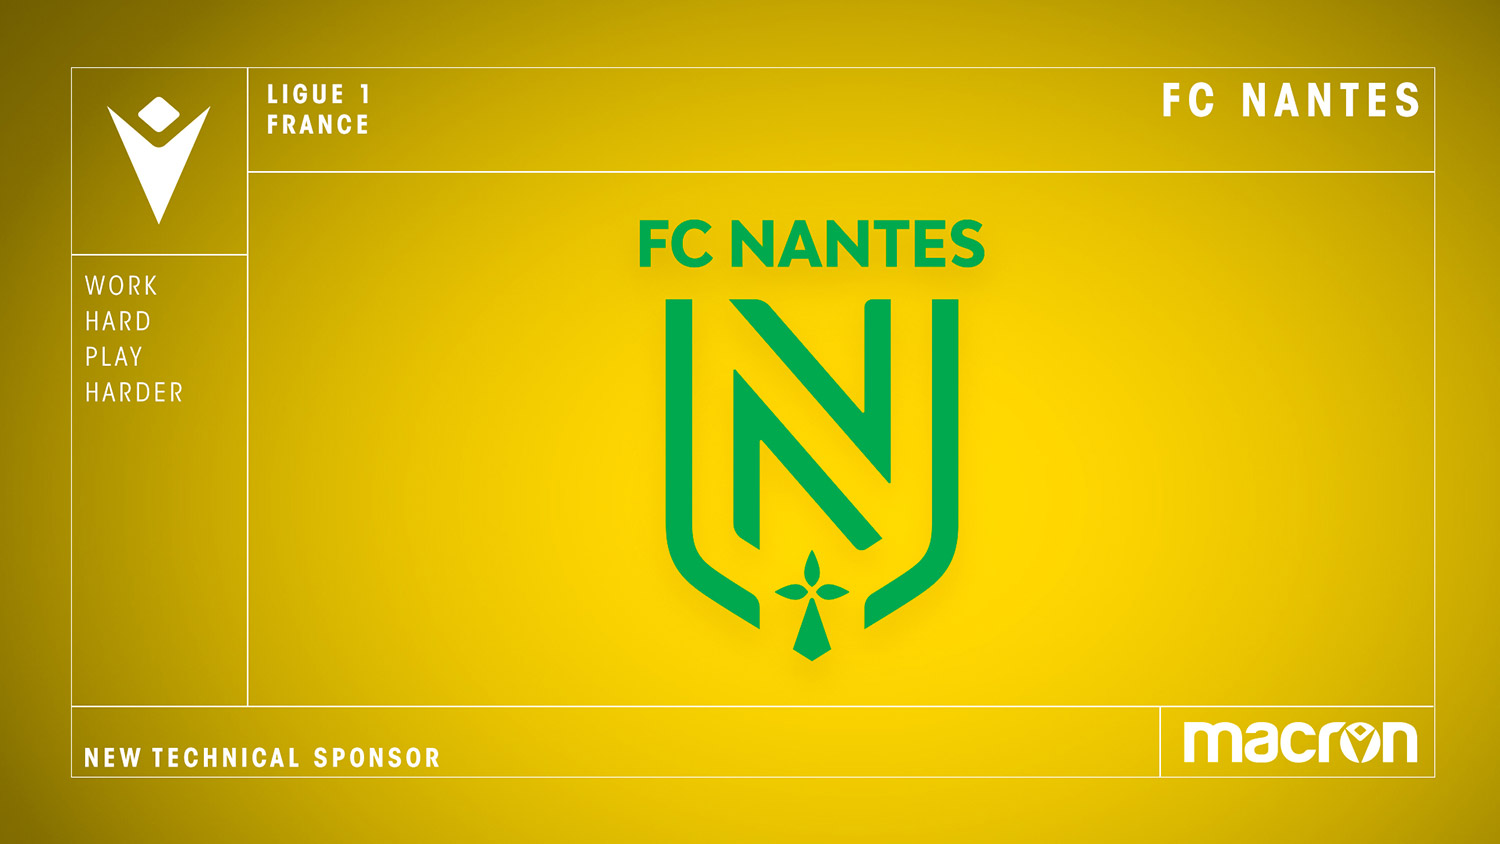 Macron kledingsponsor FC Nantes